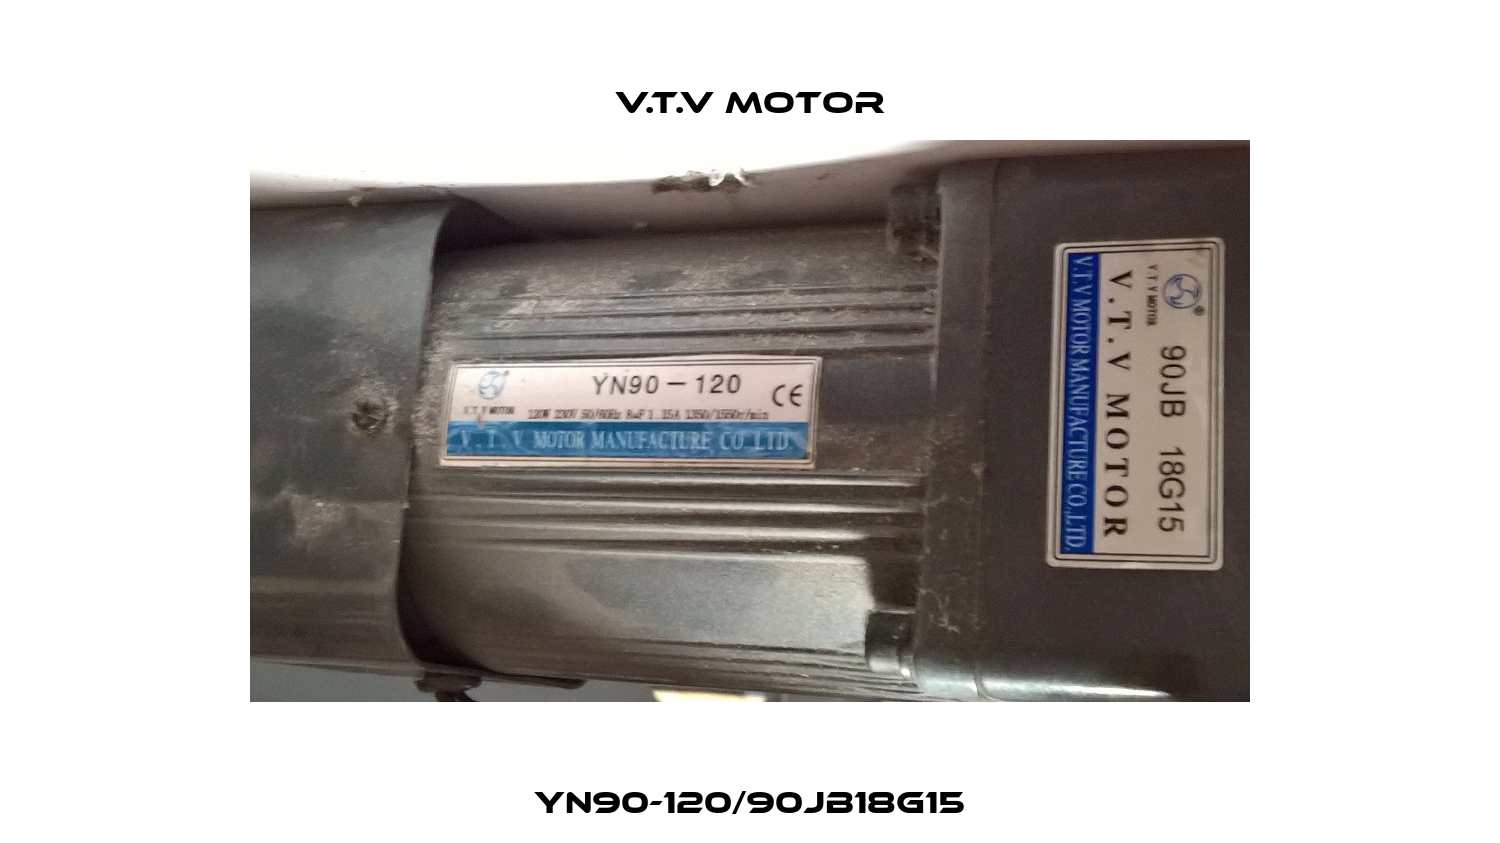 YN90-120/90JB18G15 V.t.v Motor